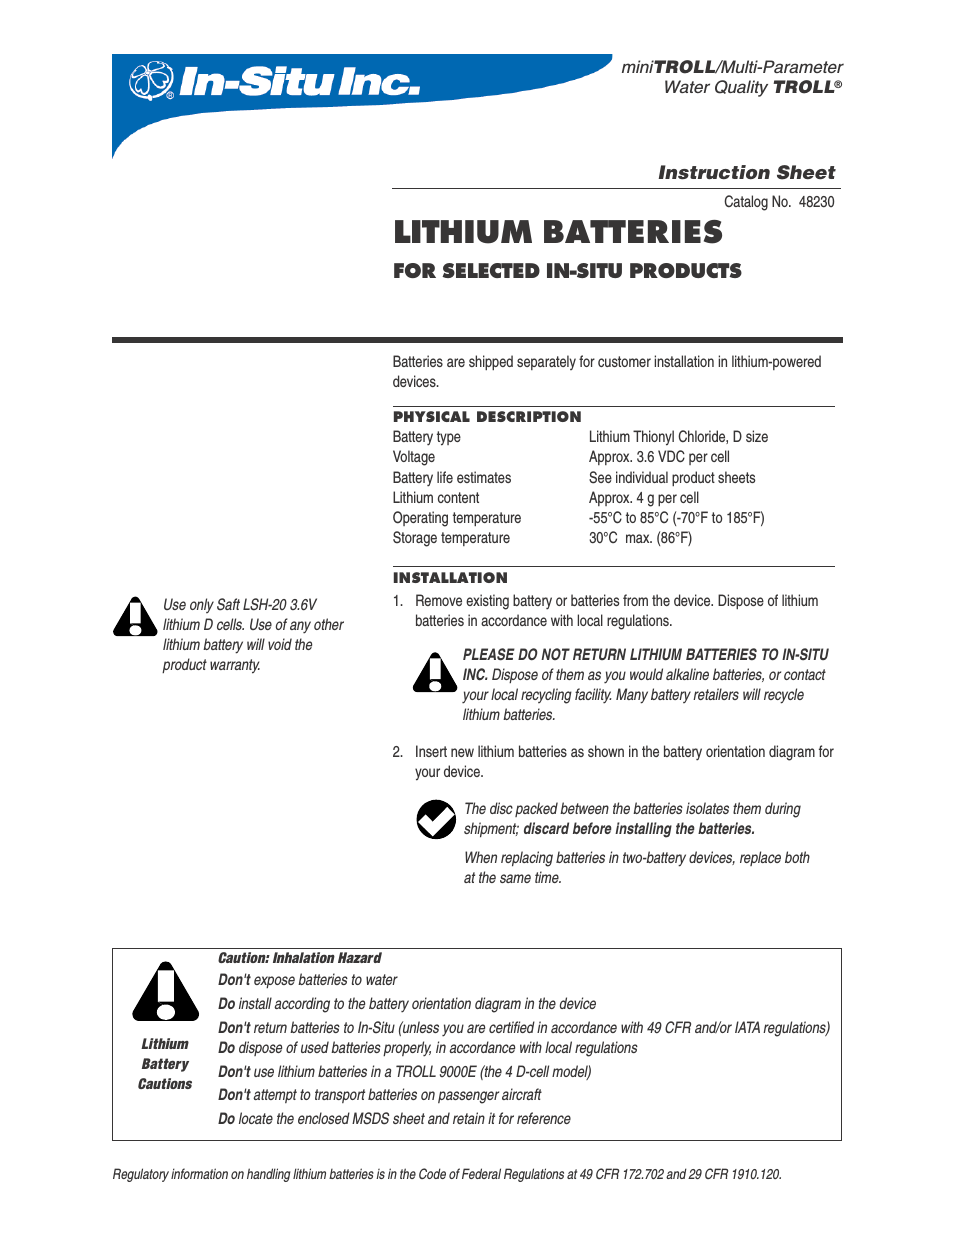 D-cell Lithium Battery Kit for TROLL 9500/9000 and miniTROLL External Power